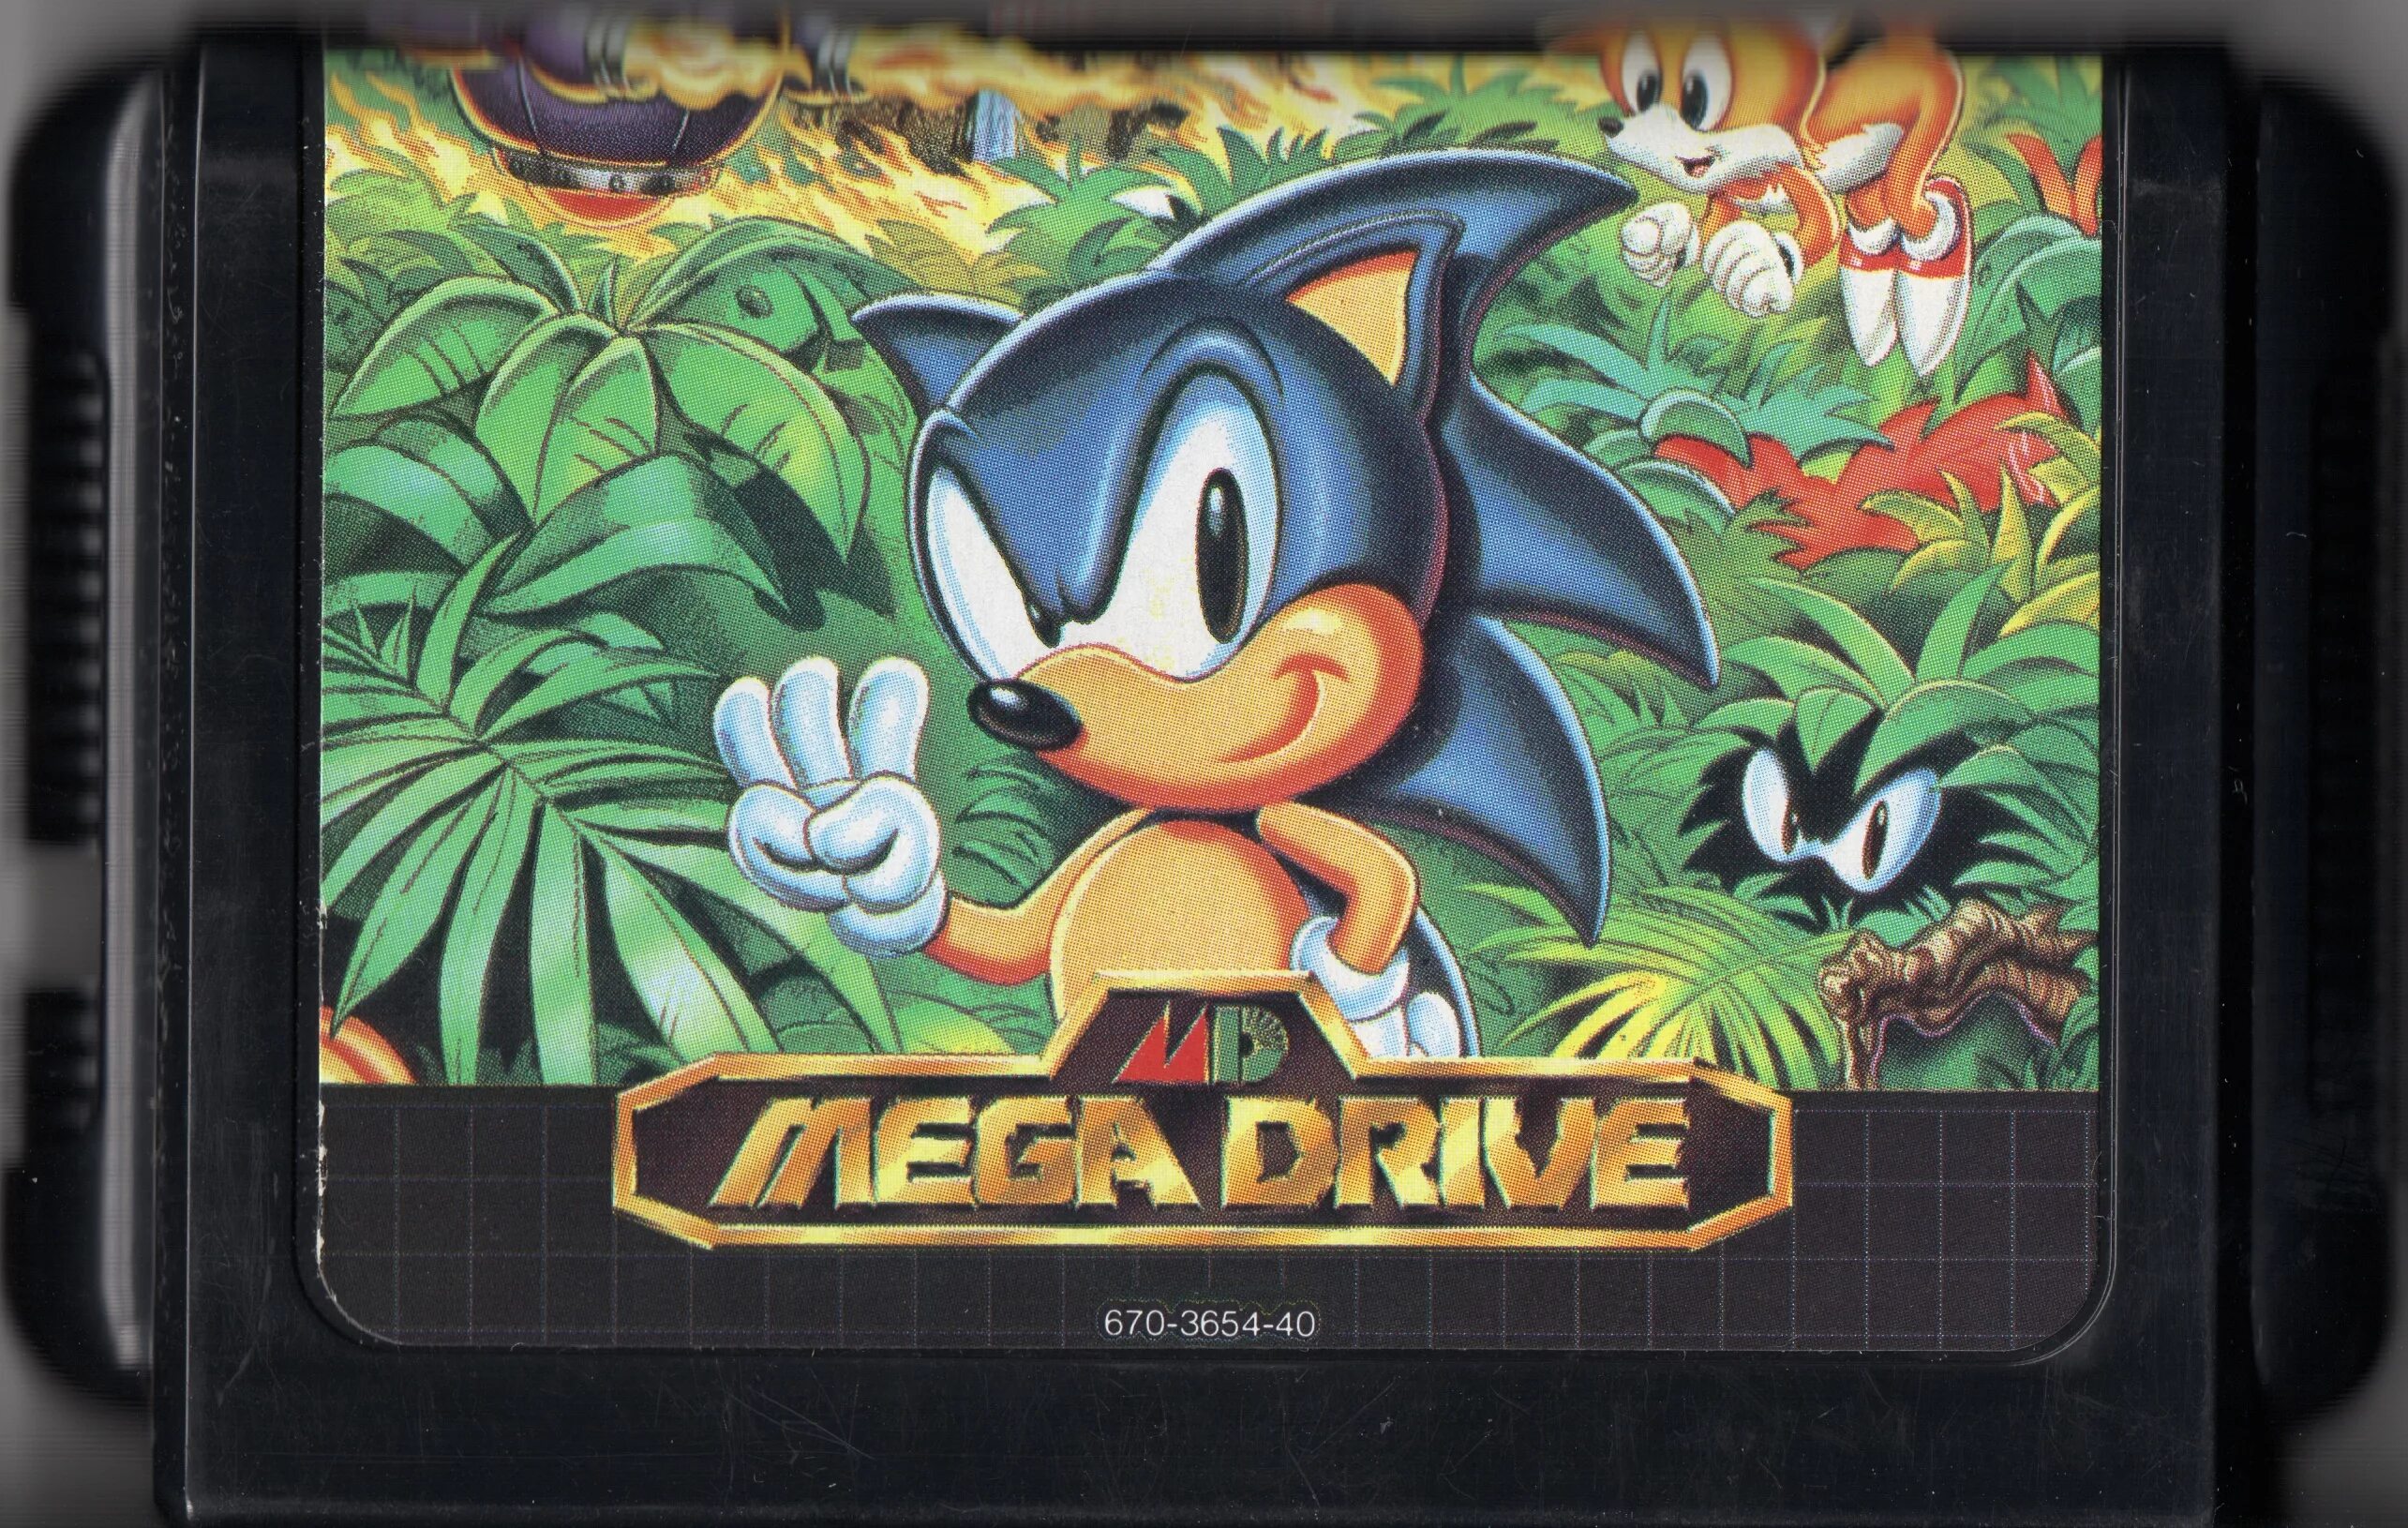 Sega Mega Drive картриджи Sonic. Sega Mega Drive Cartridge Sonic 1. Sega Mega Drive 2 картриджи Sonic. Sonic 3 Sega Mega Drive. Соник драйв